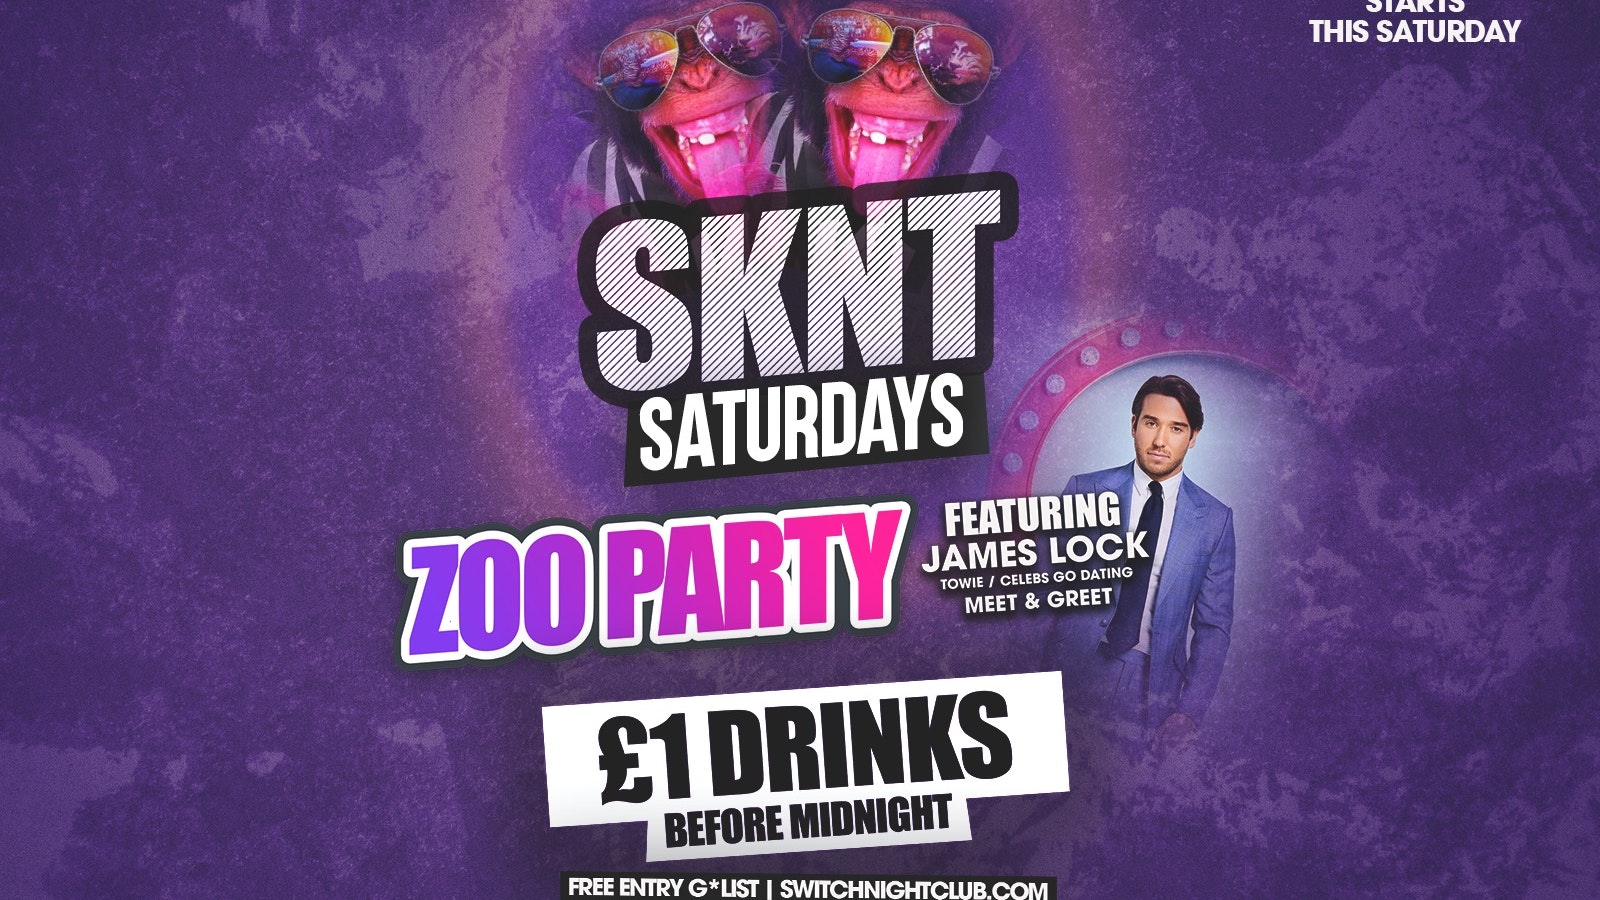 Sknt Saturdays £1 Drinks Zoo Party!